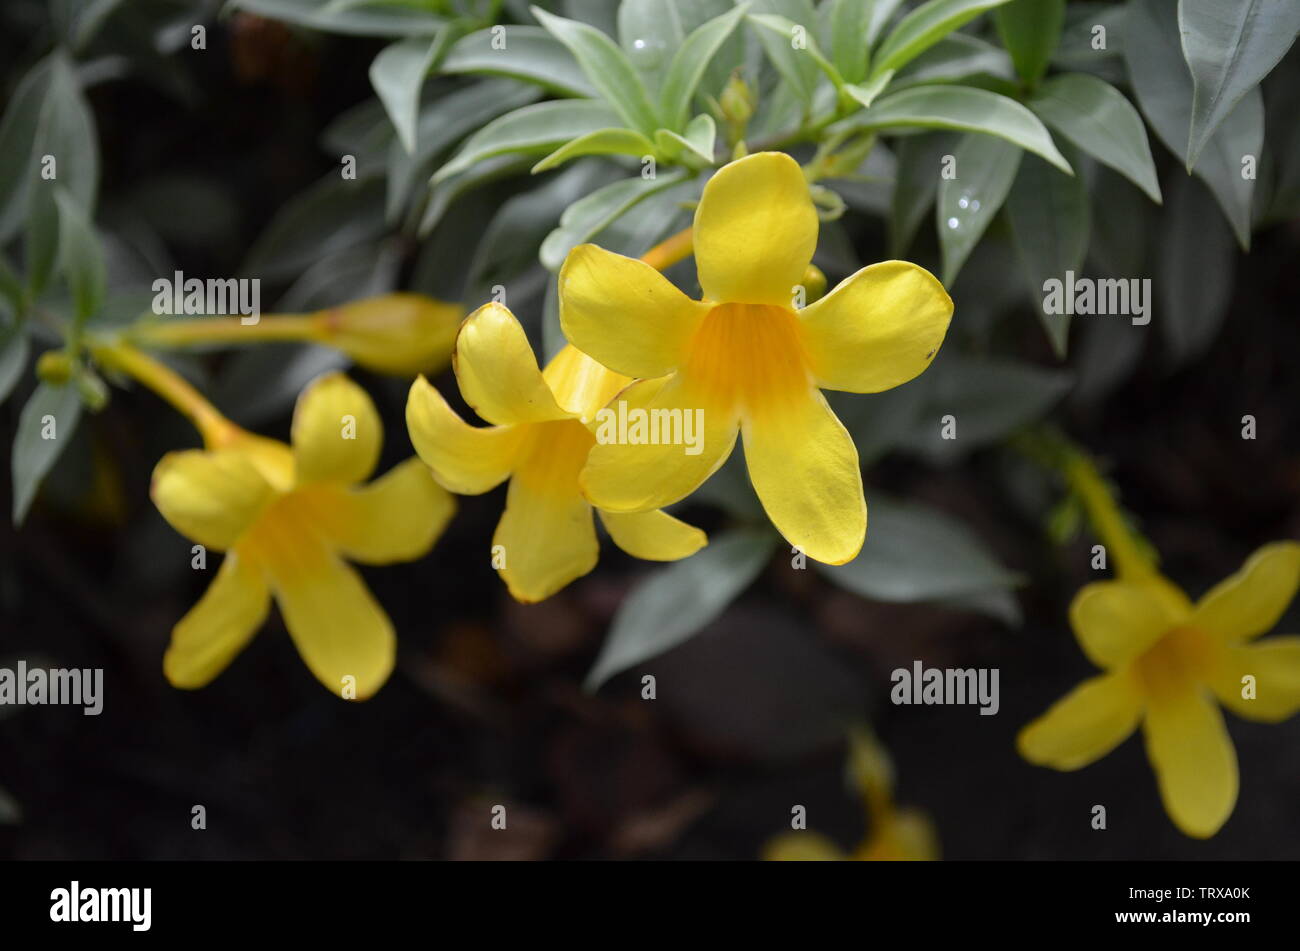 Beautyful flower in the garden. flowering plant. Allamanda. Stock Photo